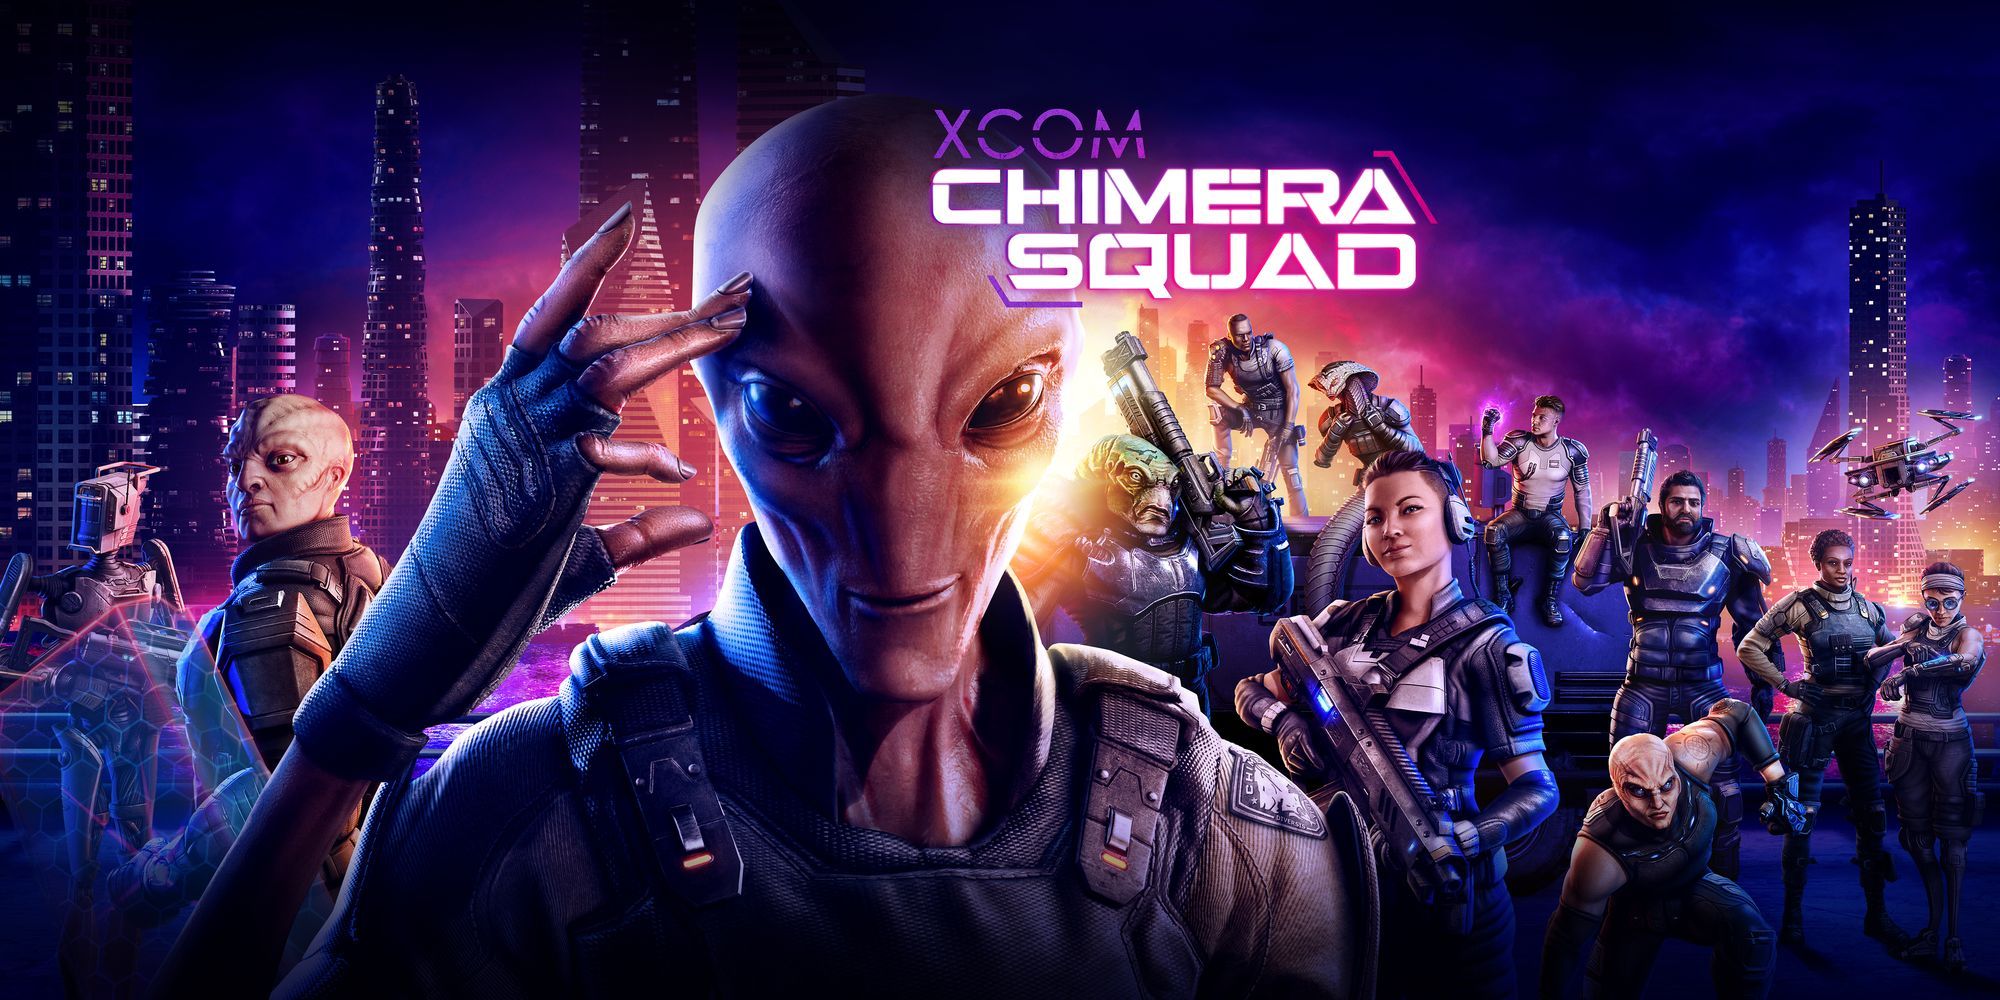 Download XCOM: Chimera Squad-FitGirl Repack + Update v1.0.0.46049-CODEX